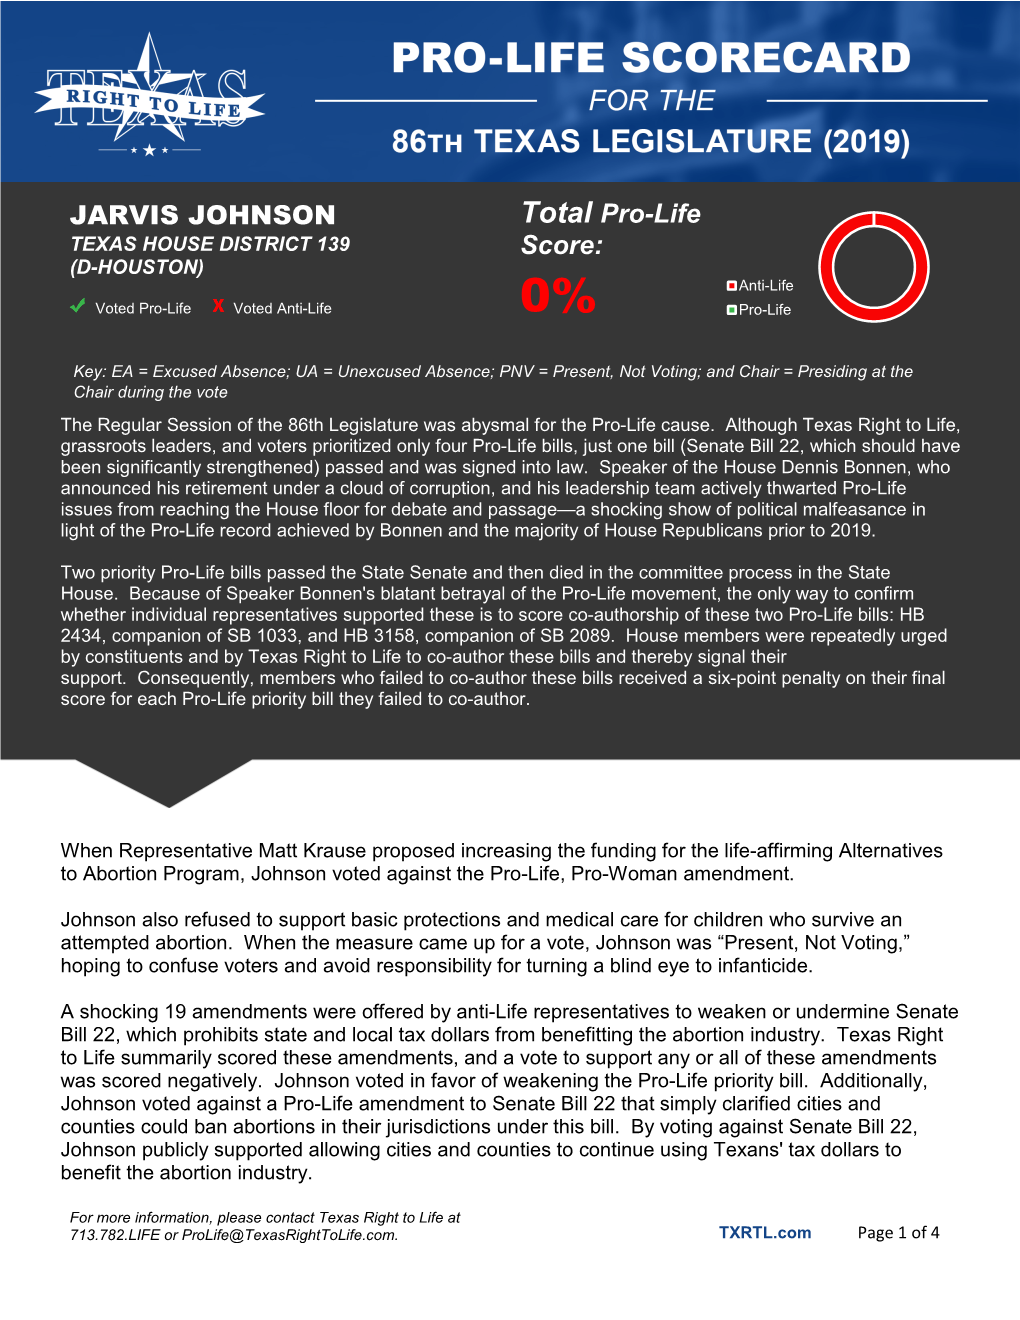 JARVIS JOHNSON Total Pro-Life Score